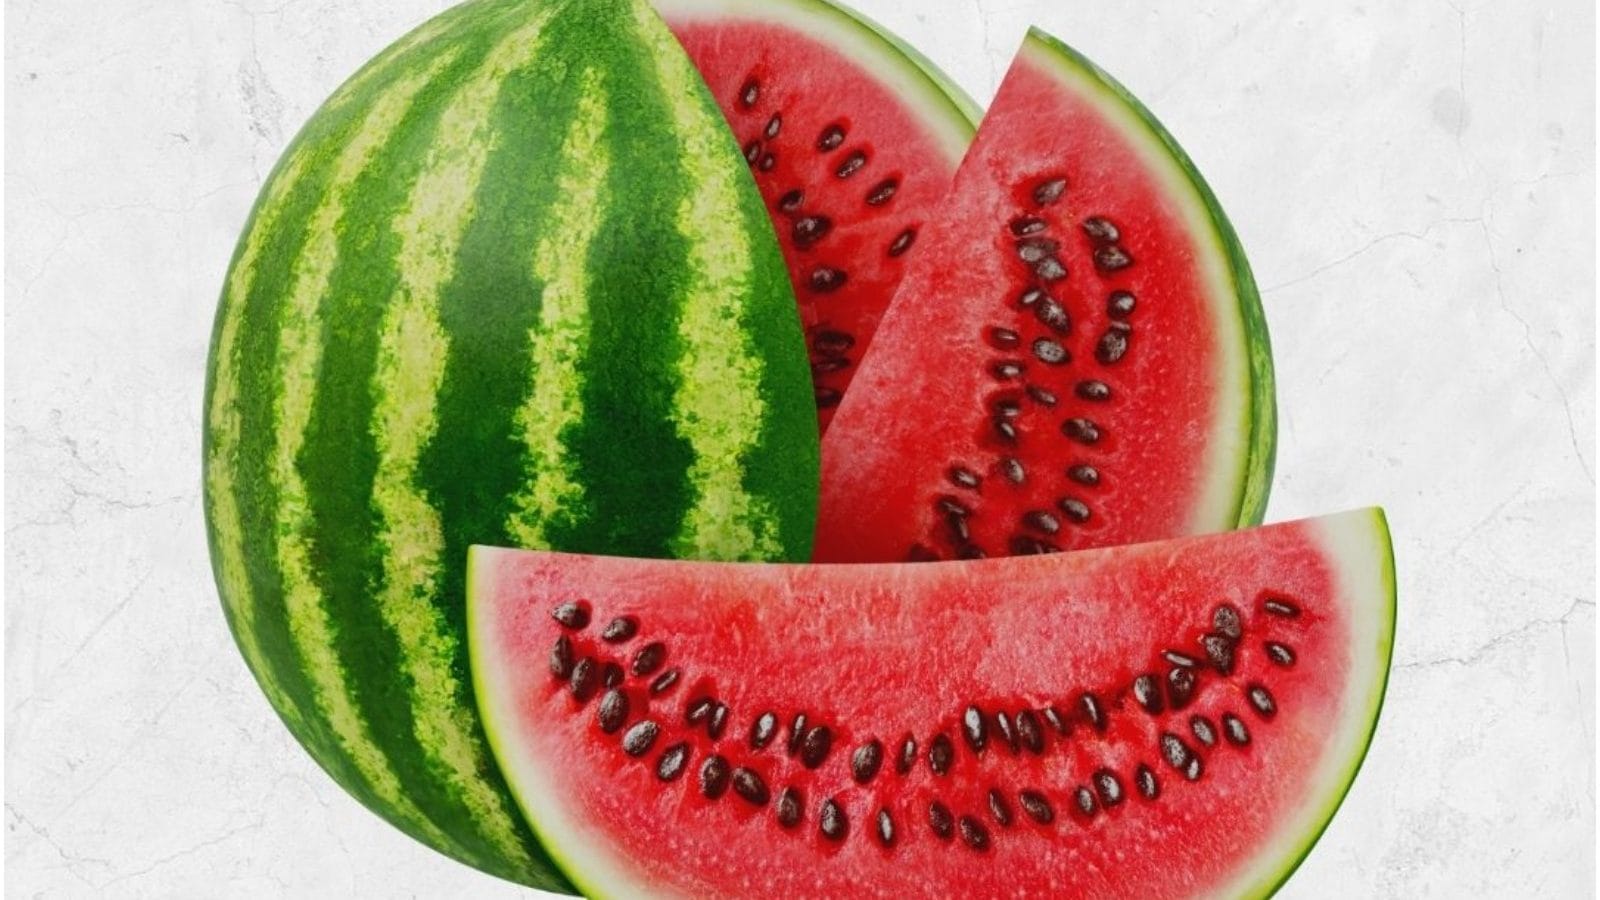 Qualities That Make Watermelon a Summer Fruit